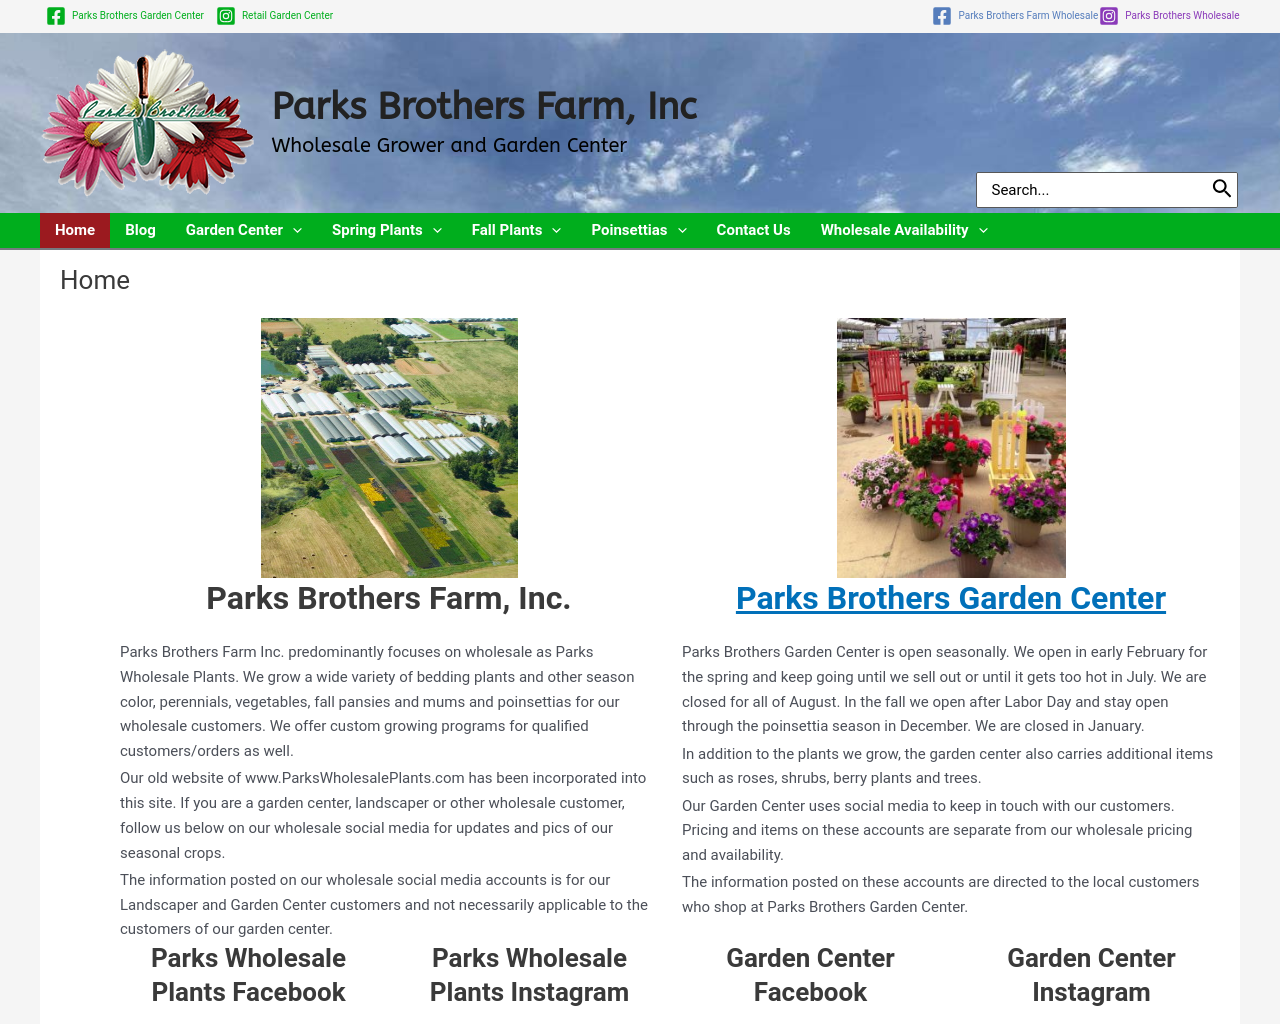 parkswholesaleplants.com